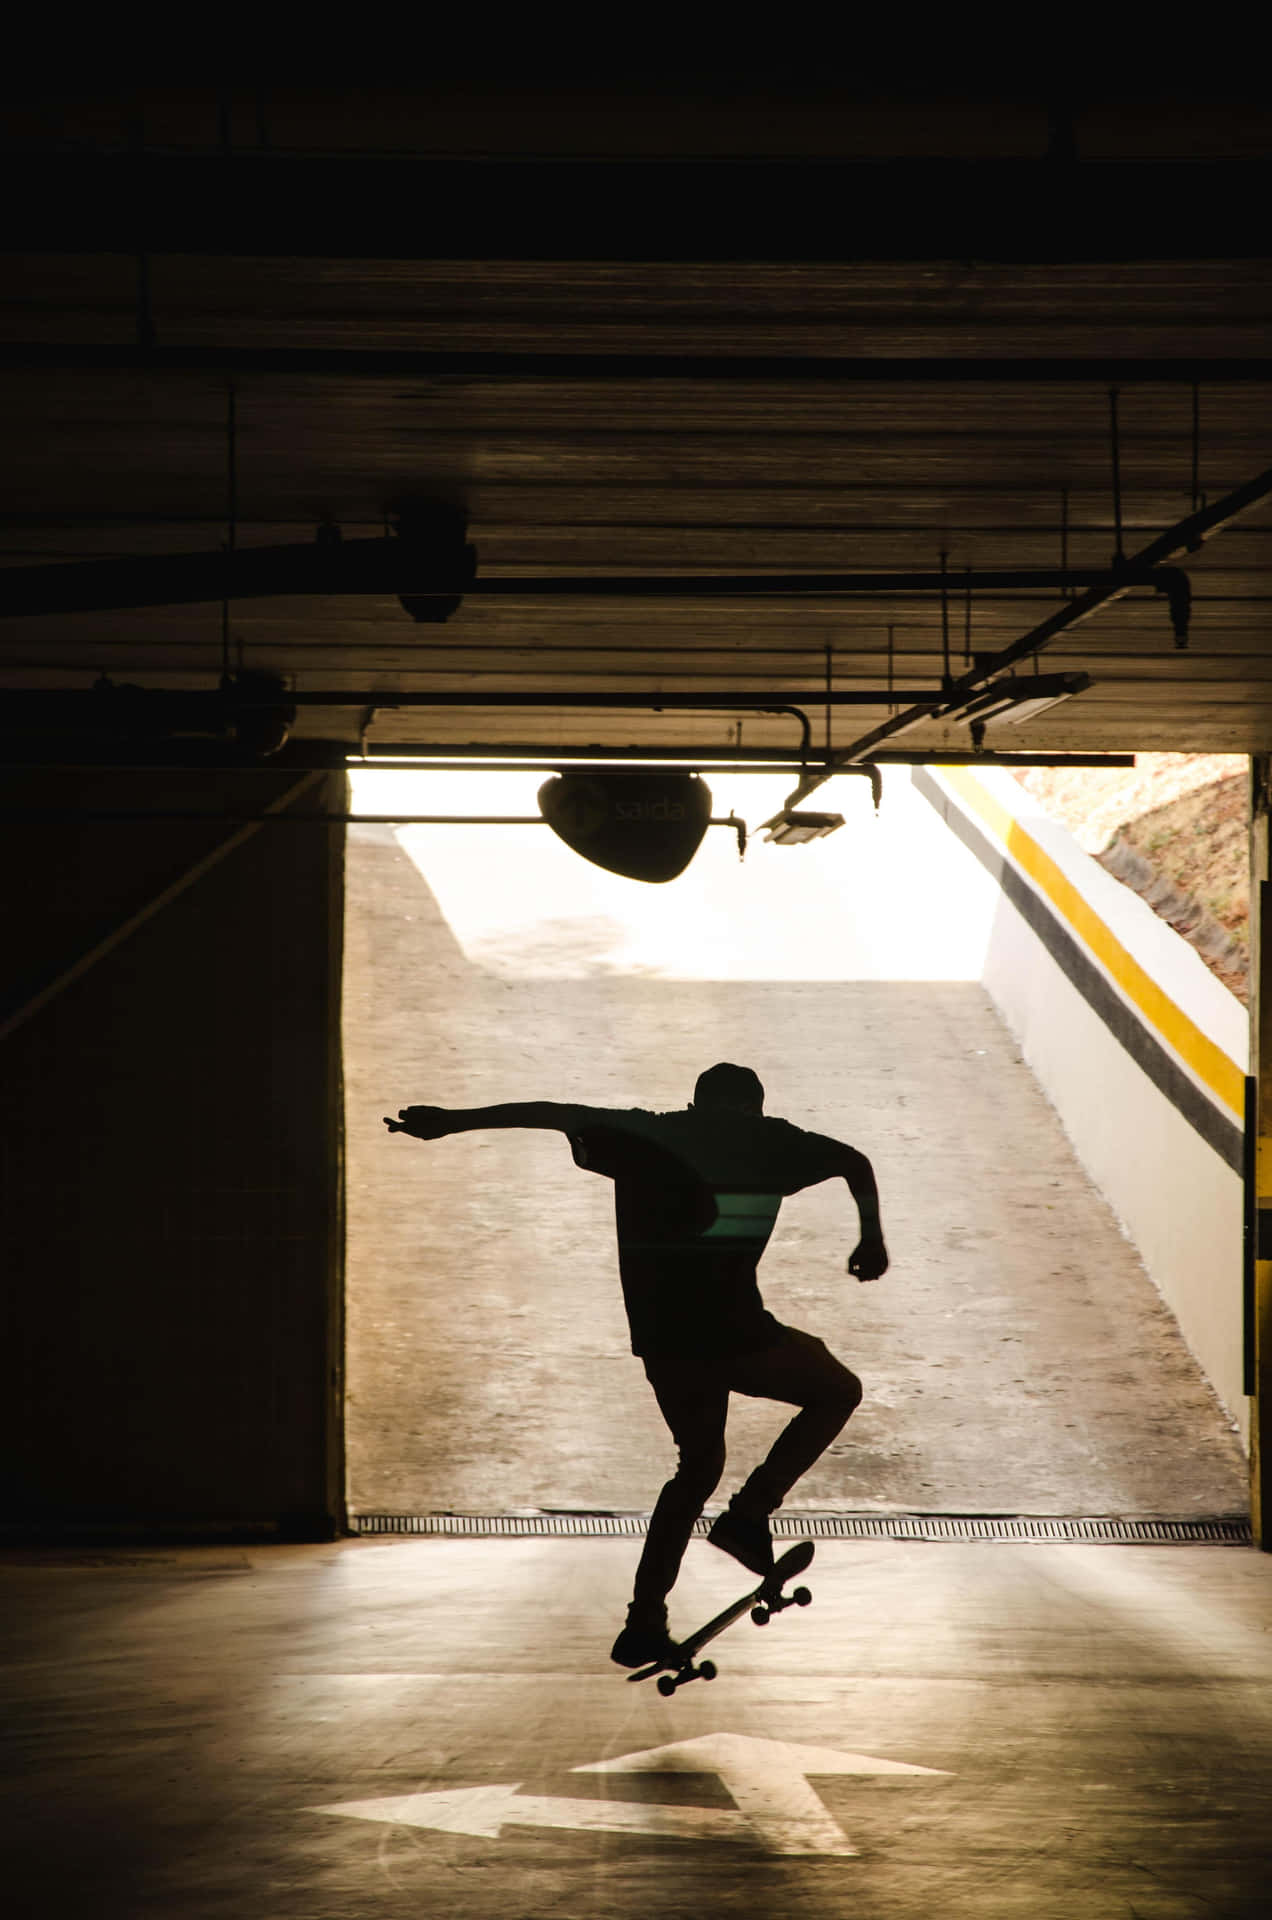 An adventurous street skater making a daring jump over an obstacle Wallpaper